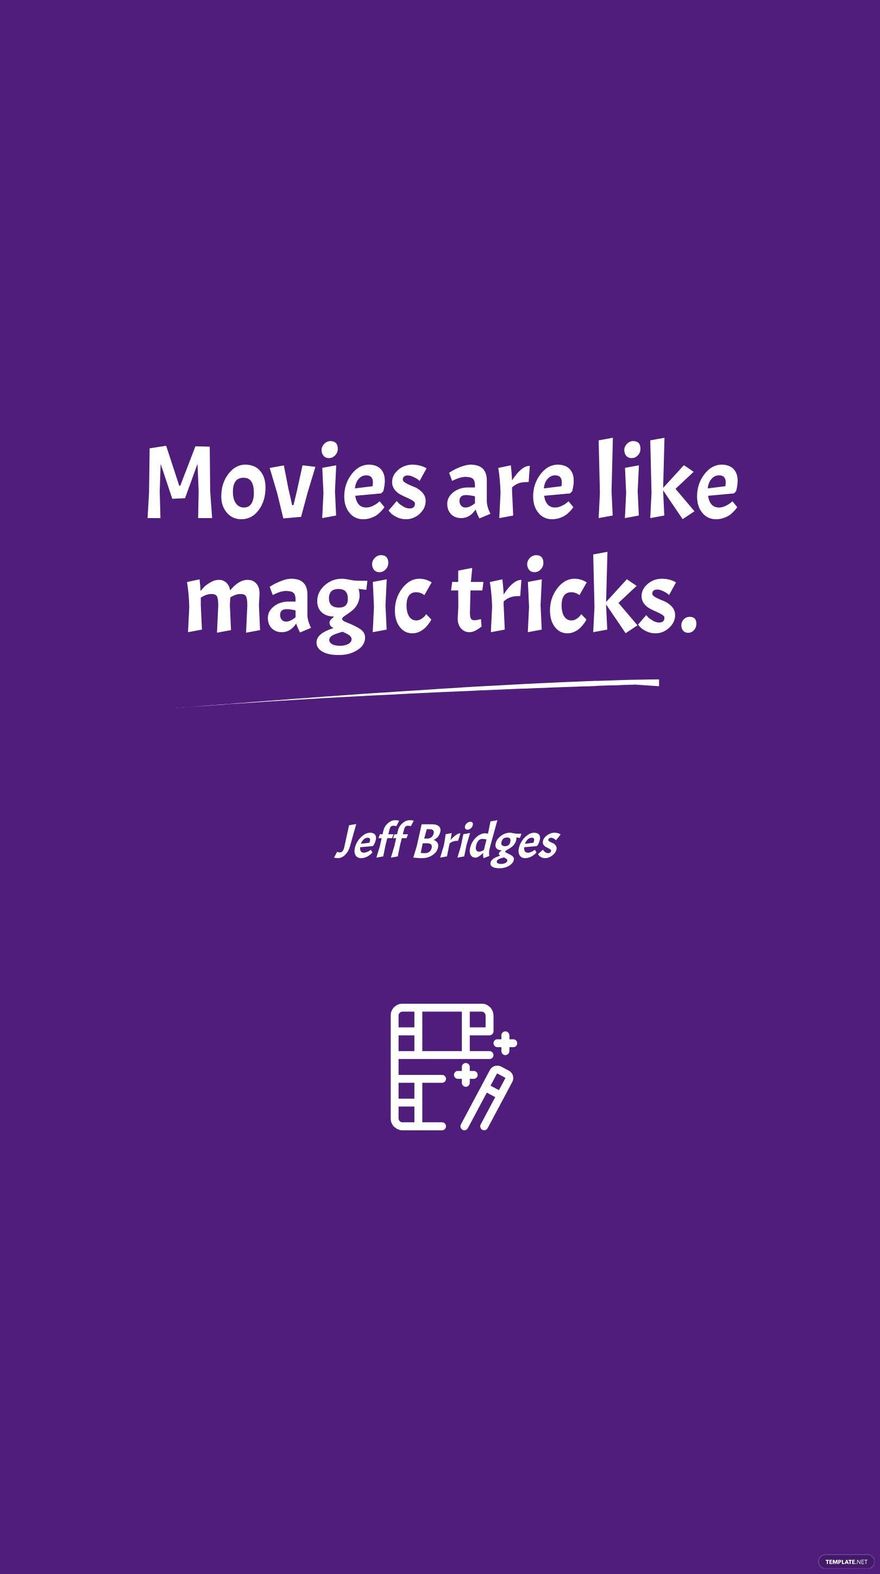 Jeff Bridges - Movies are like magic tricks. in JPG